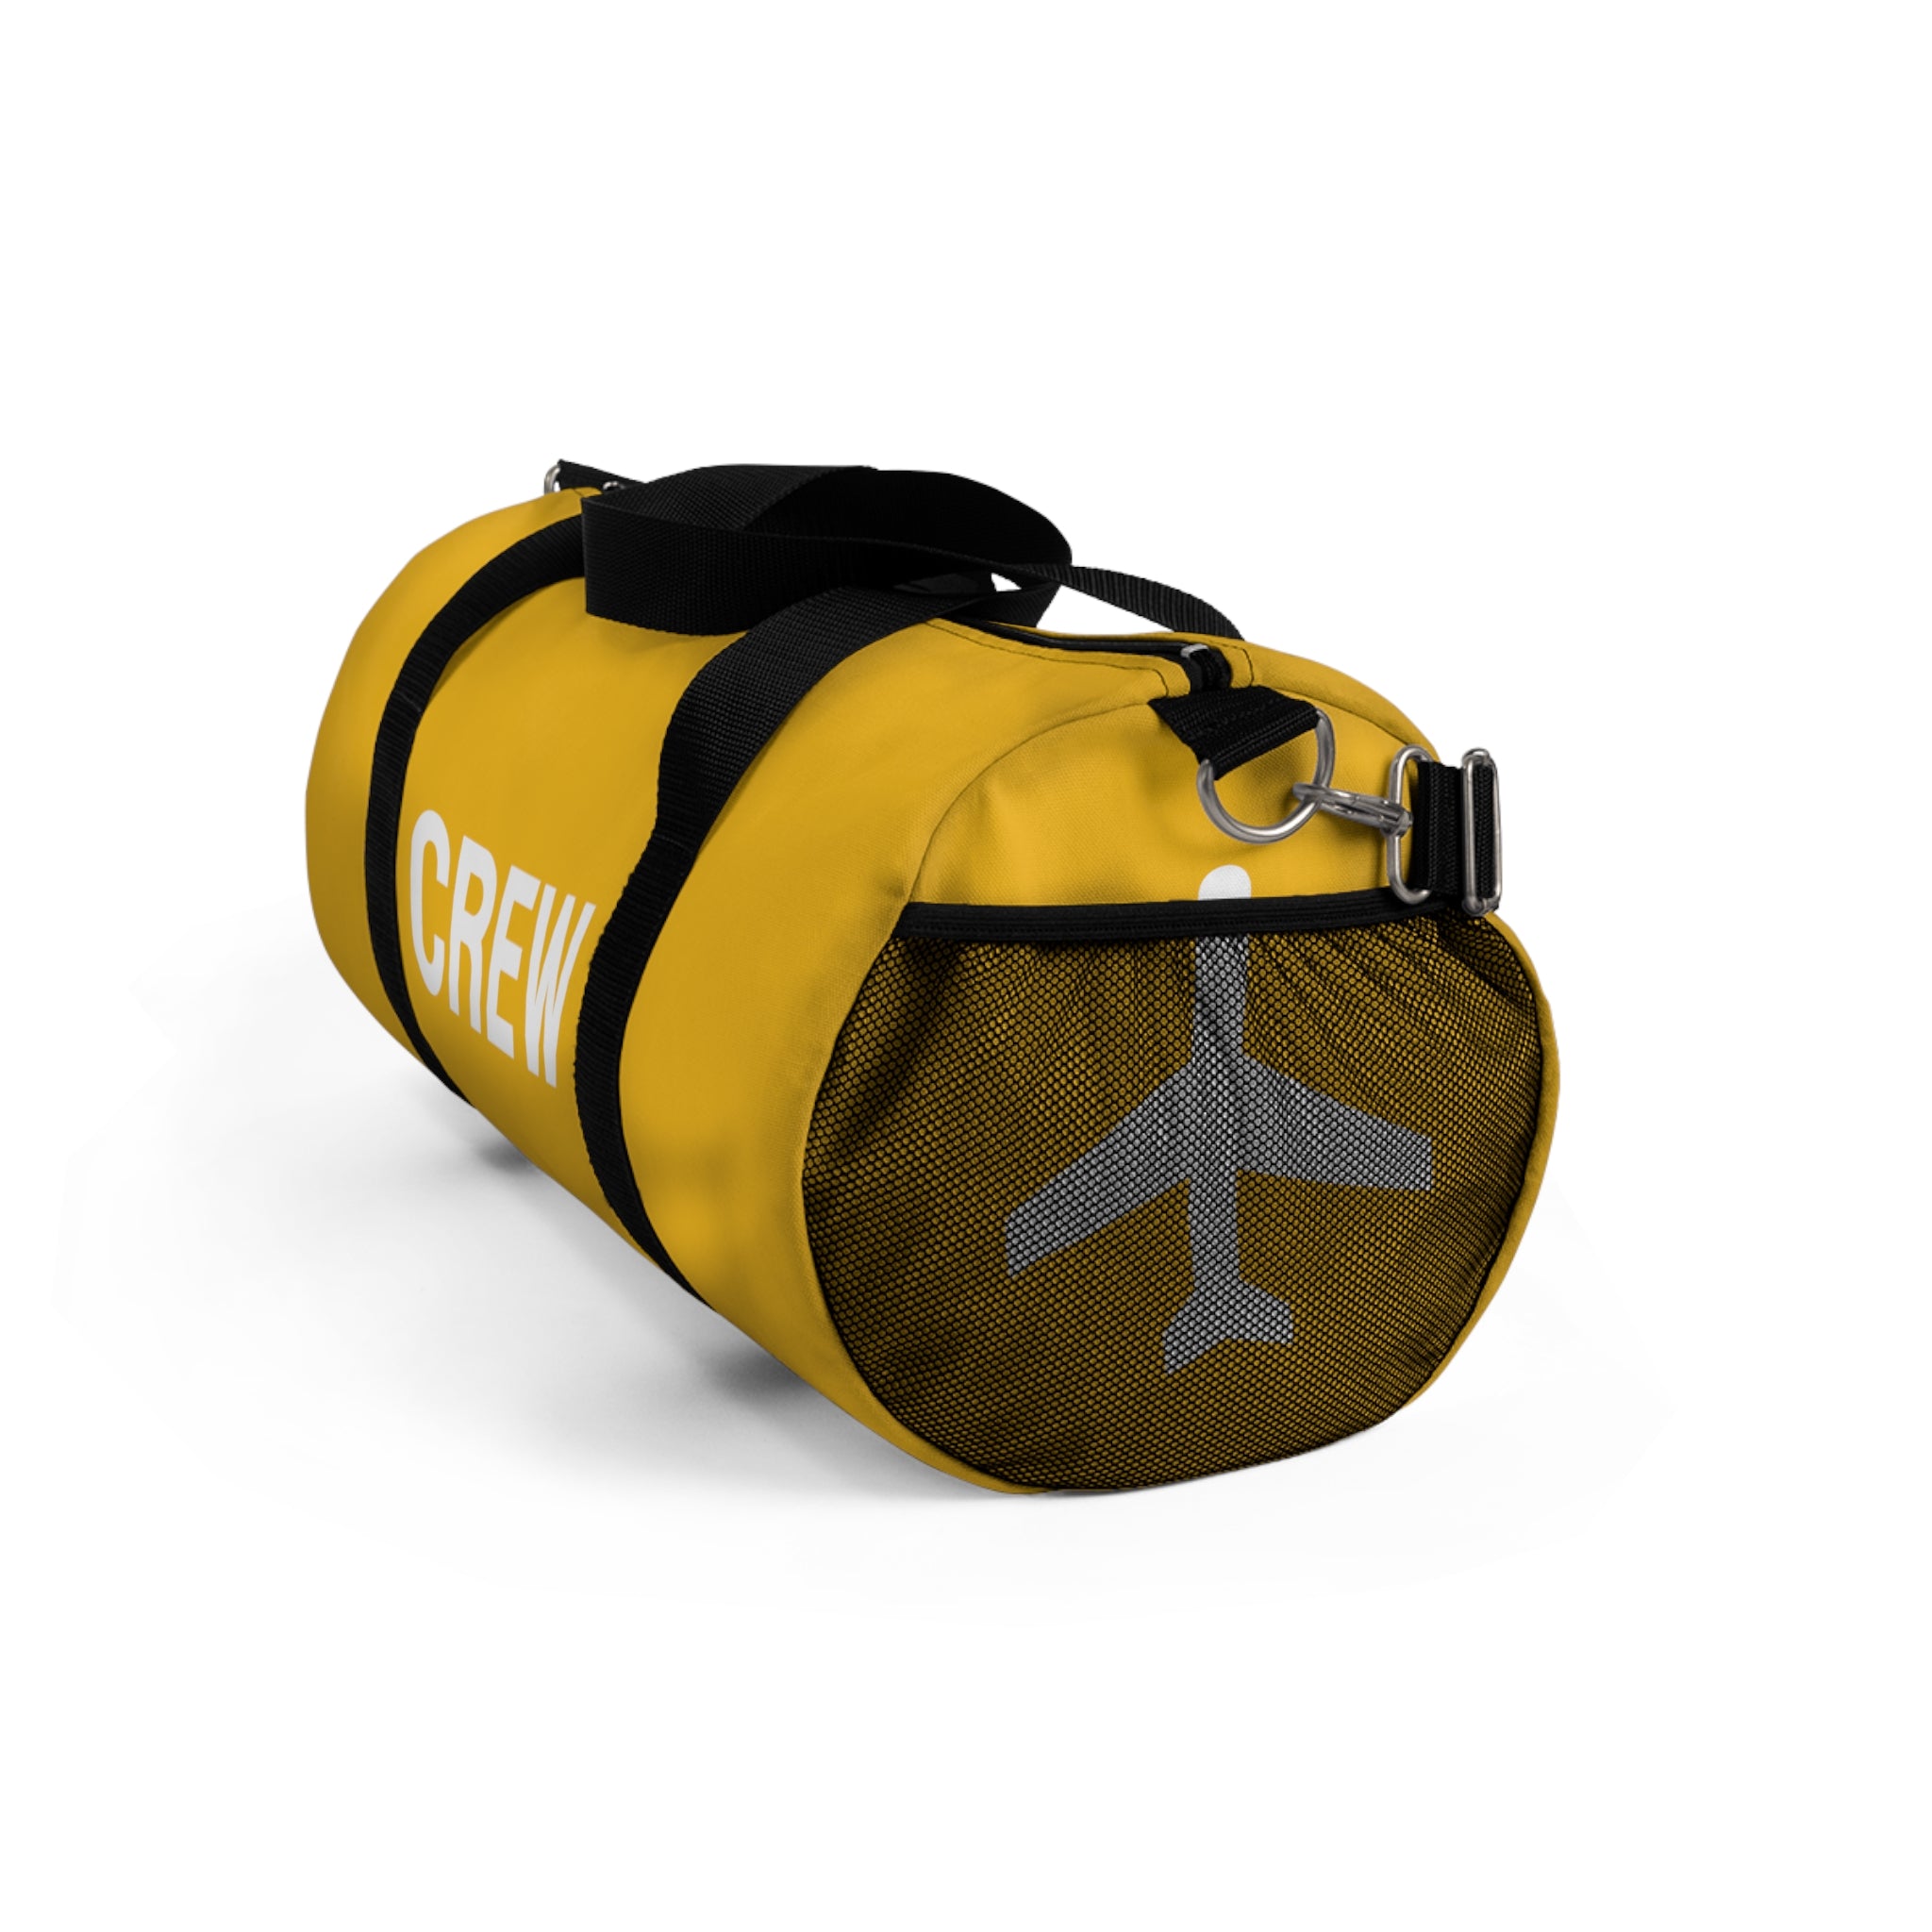 Crew Duffle Bag (Yellow)